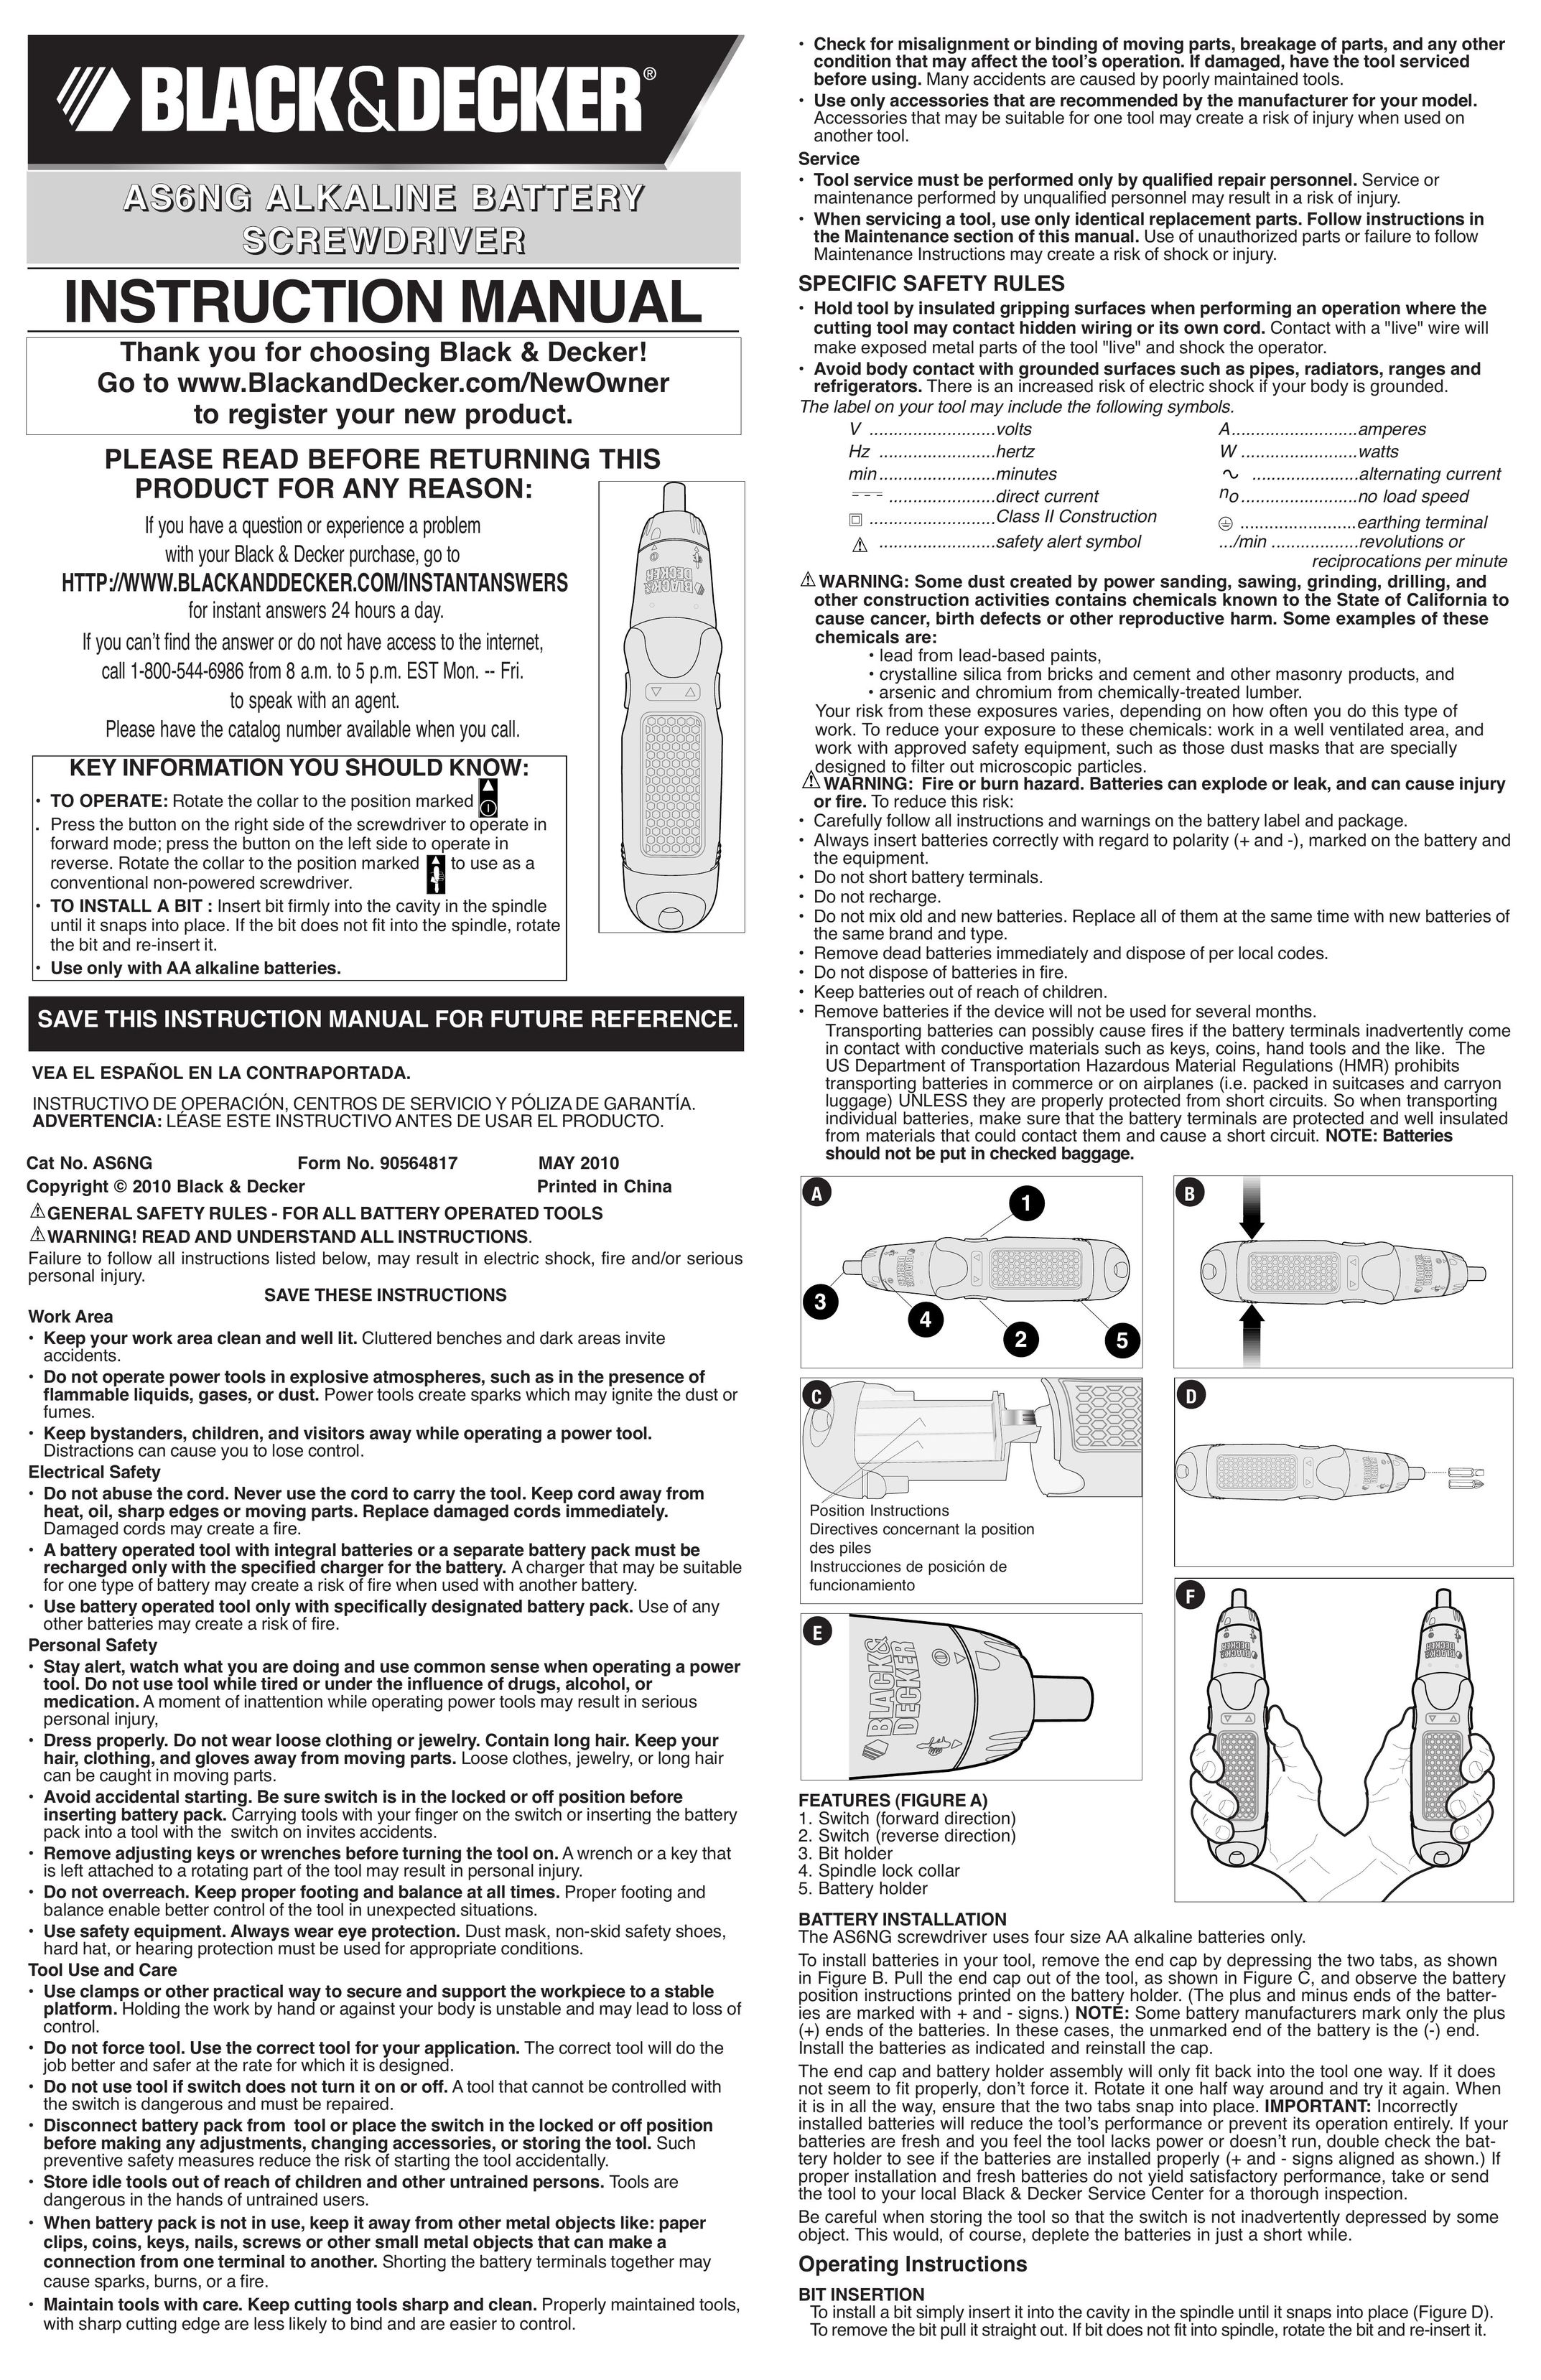 Black & Decker AS6NG Power Screwdriver User Manual